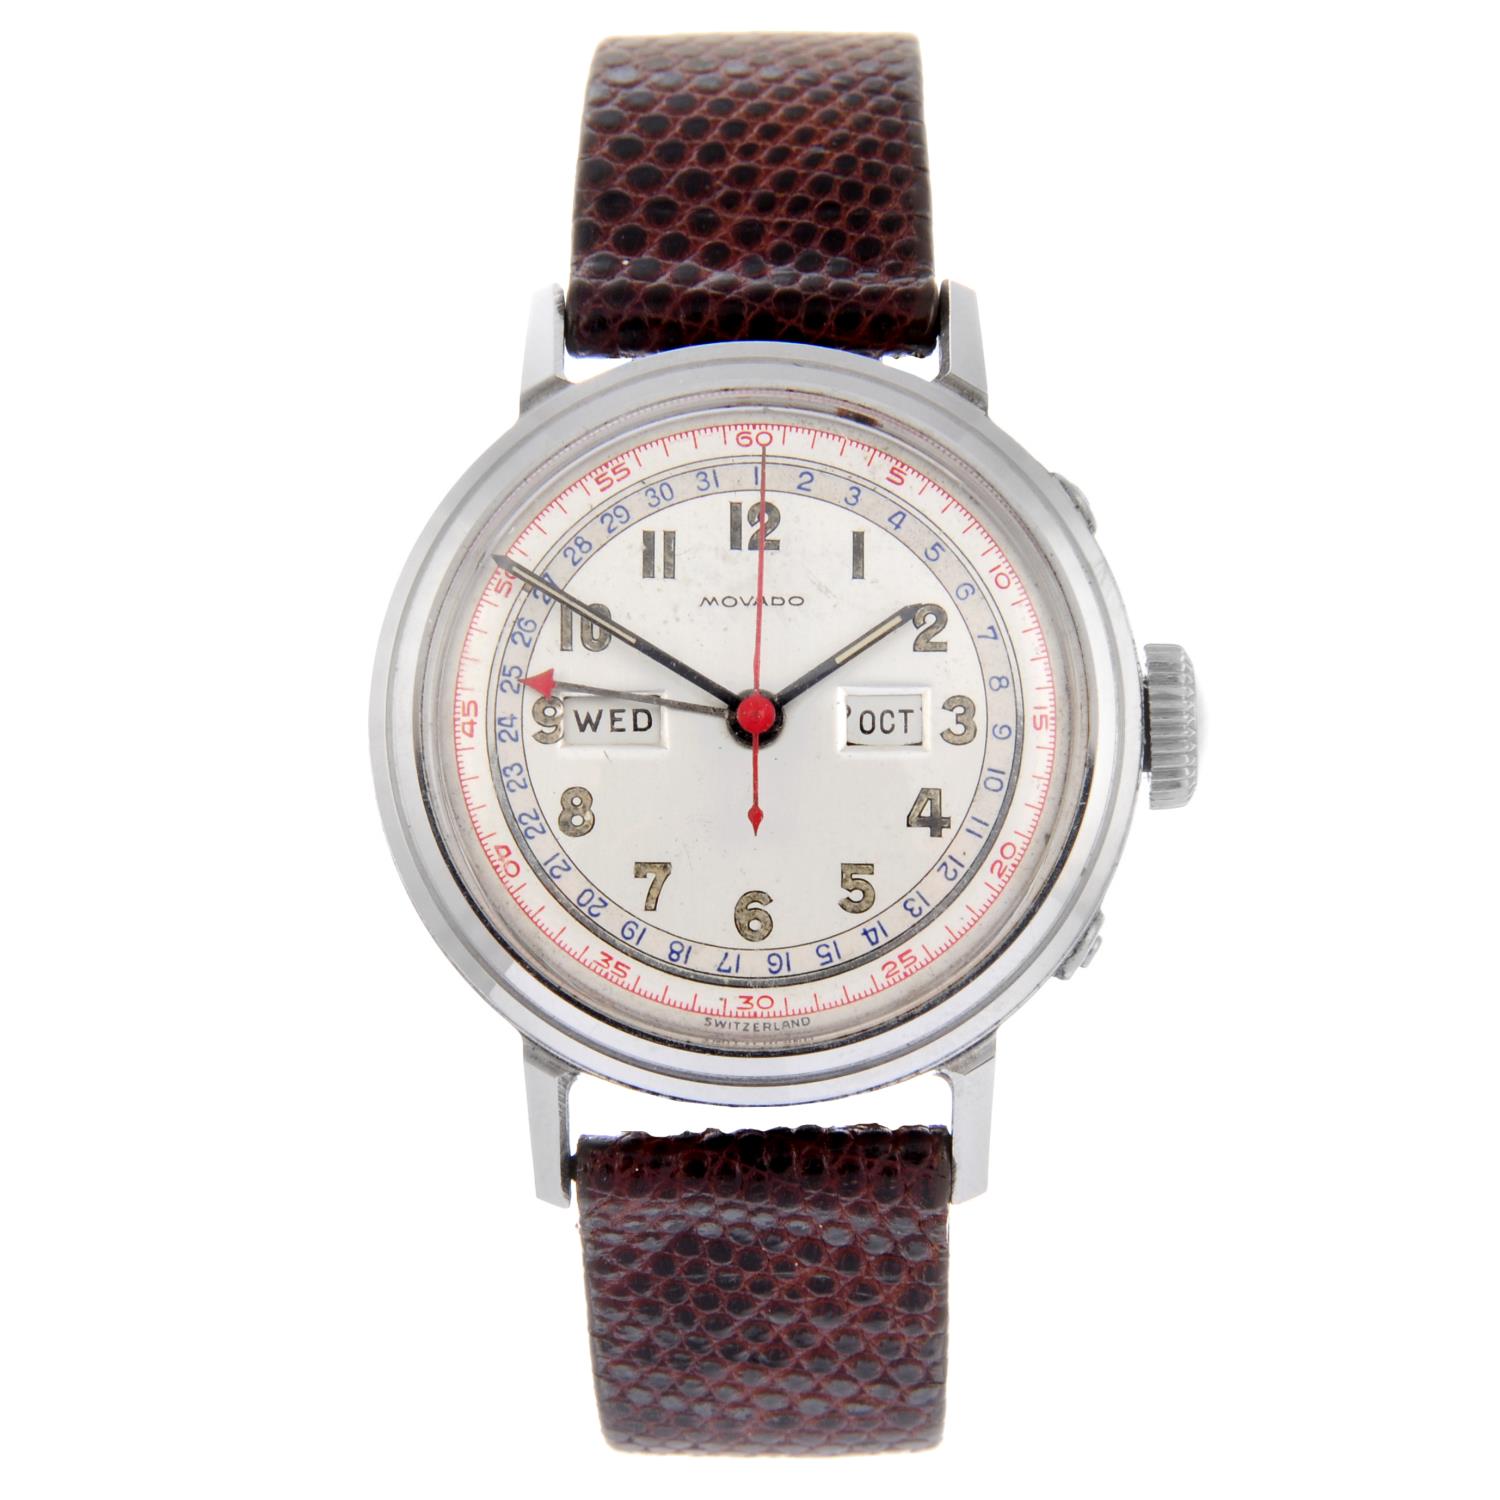 MOVADO - a mid-size triple date wrist watch.